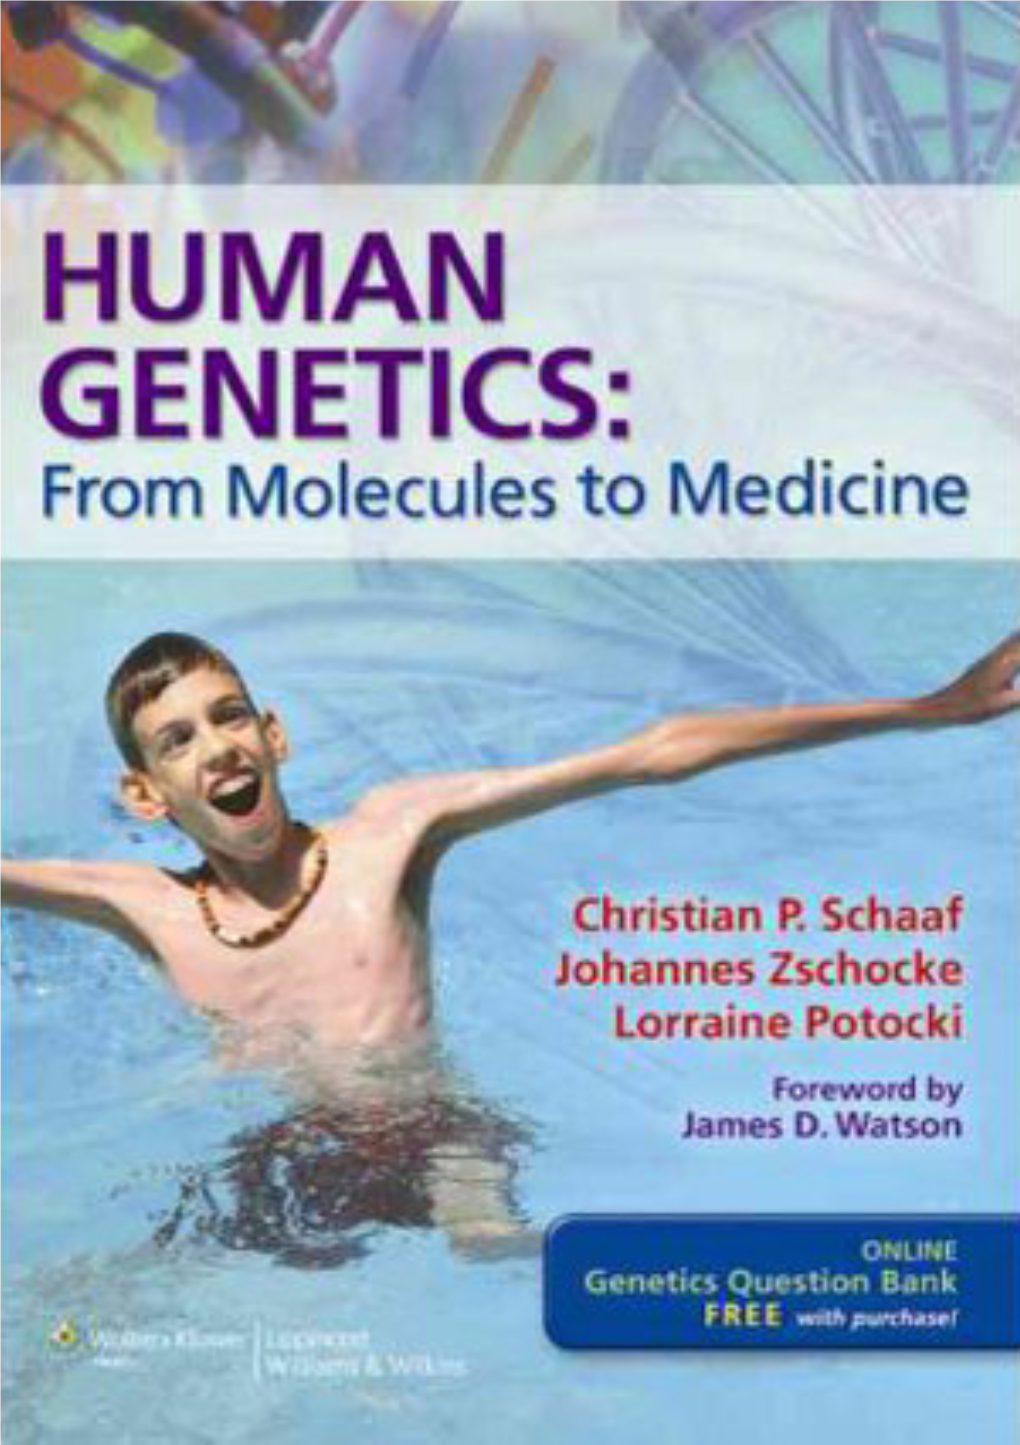 Human Genetics: from Molecules to Medicine